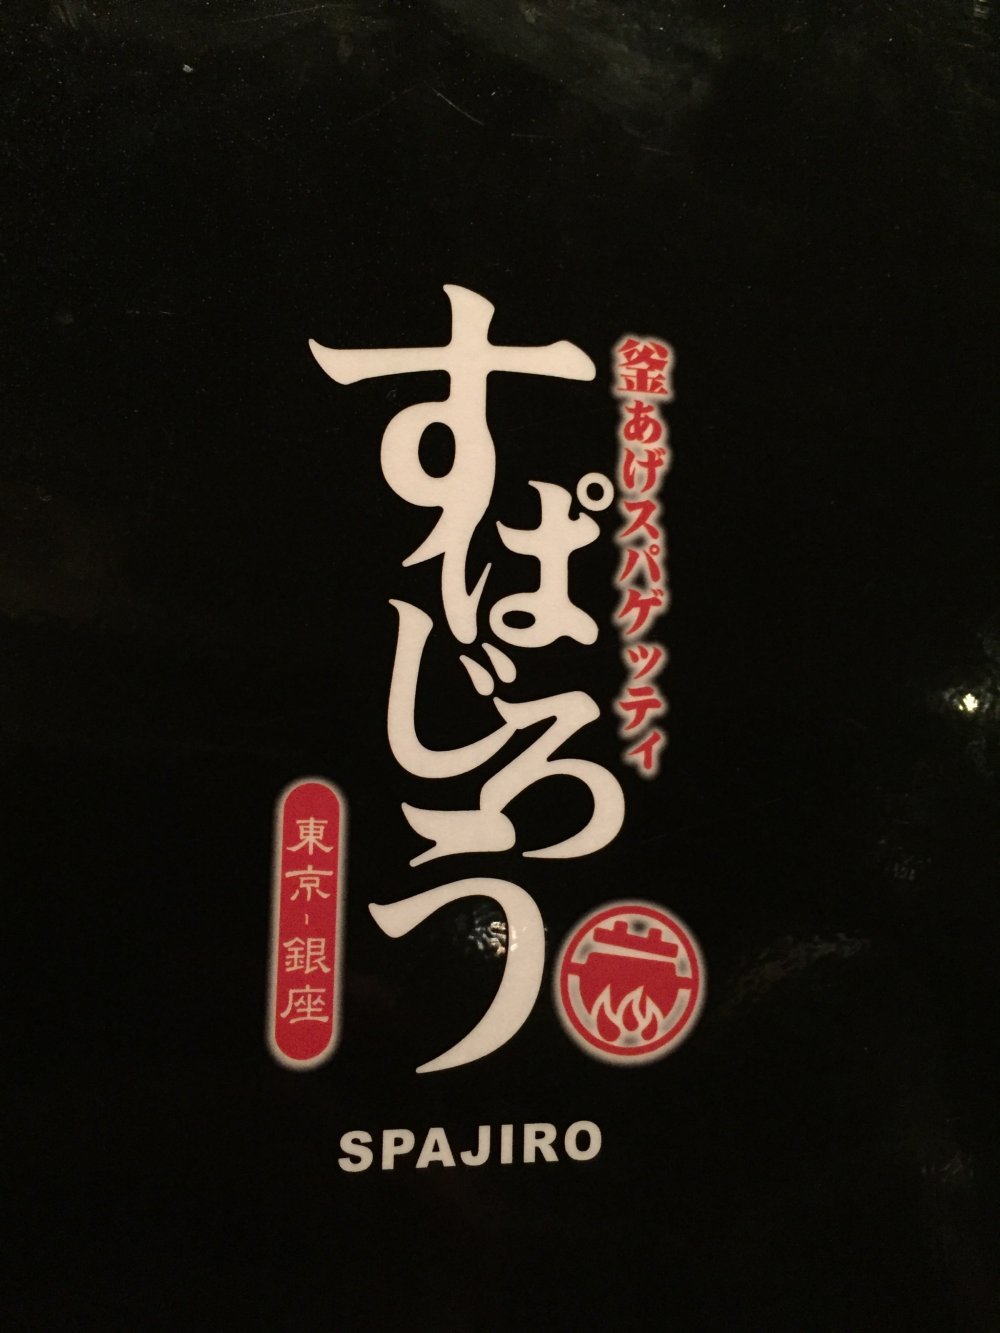 Spajiro is an excellent Japanese spaghetti chain.
